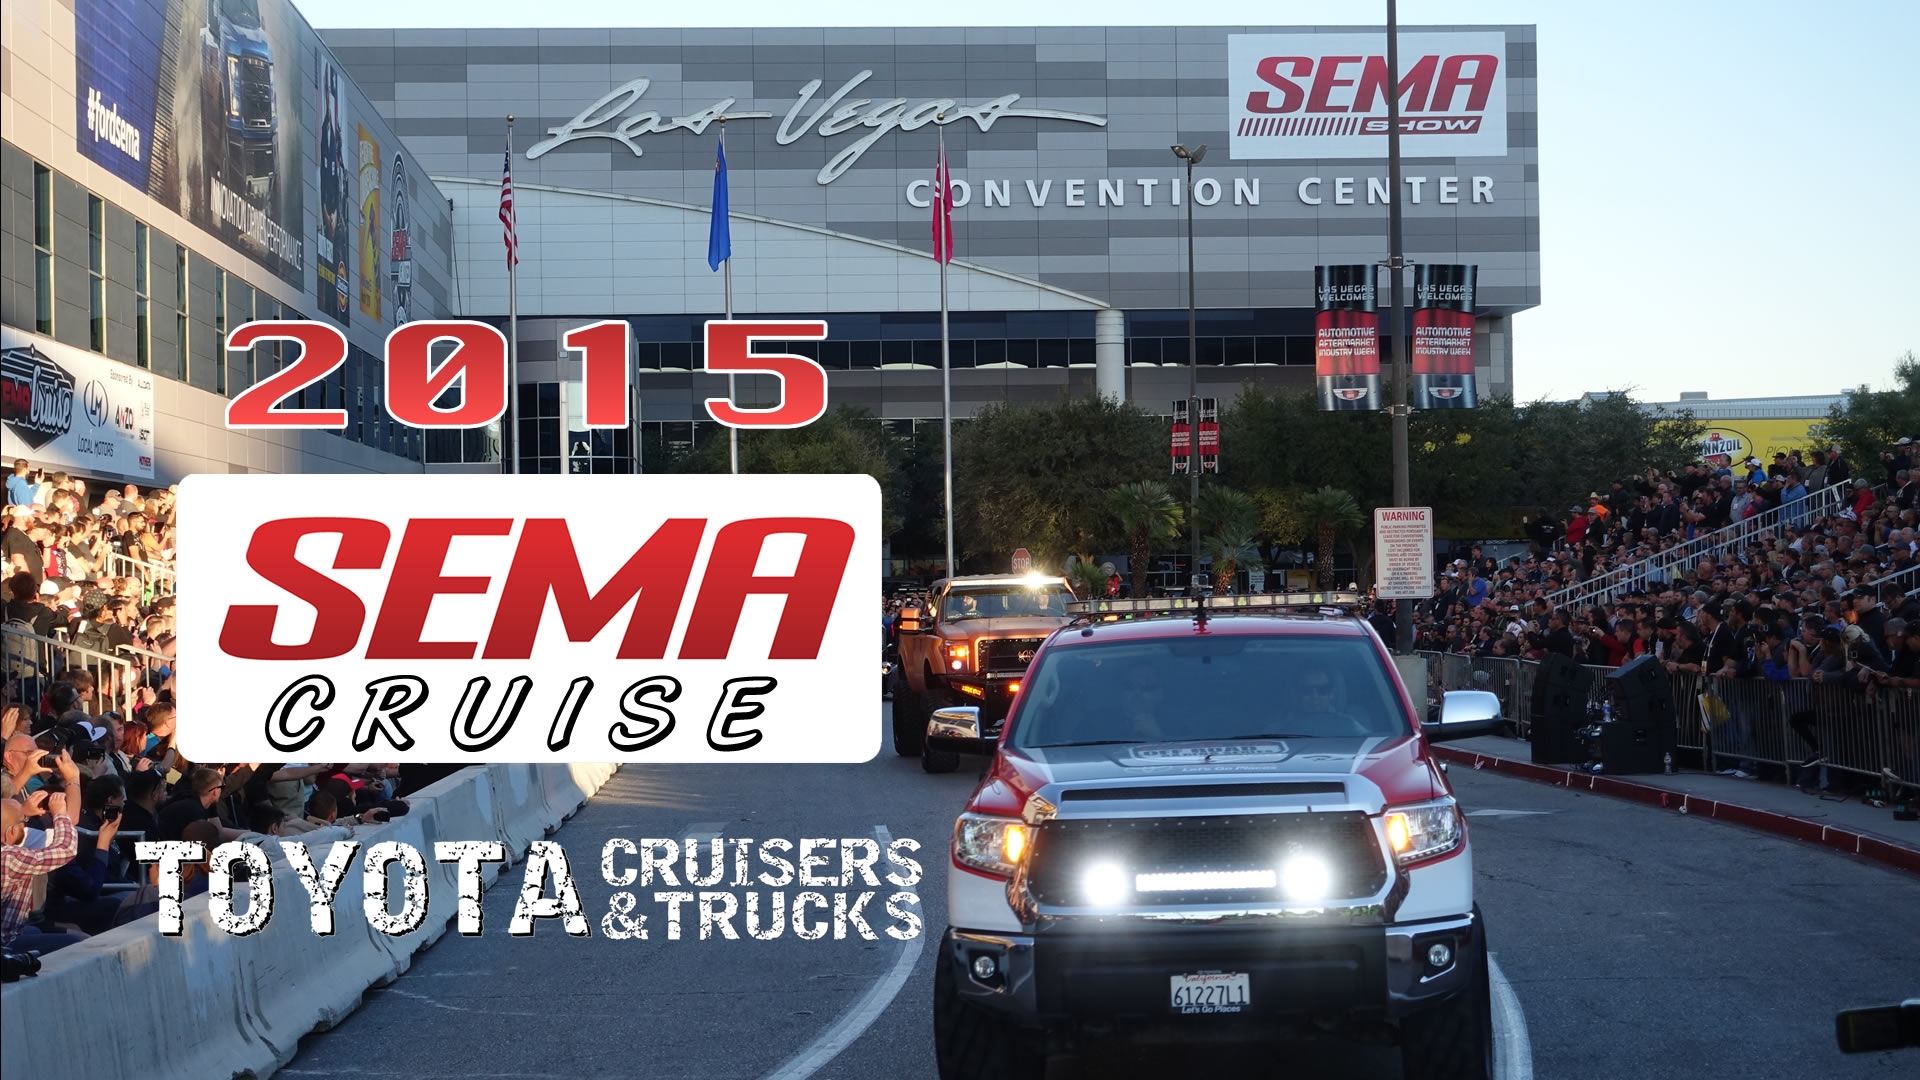 SEMA Cruise included many Toyota Cruisers & Trucks